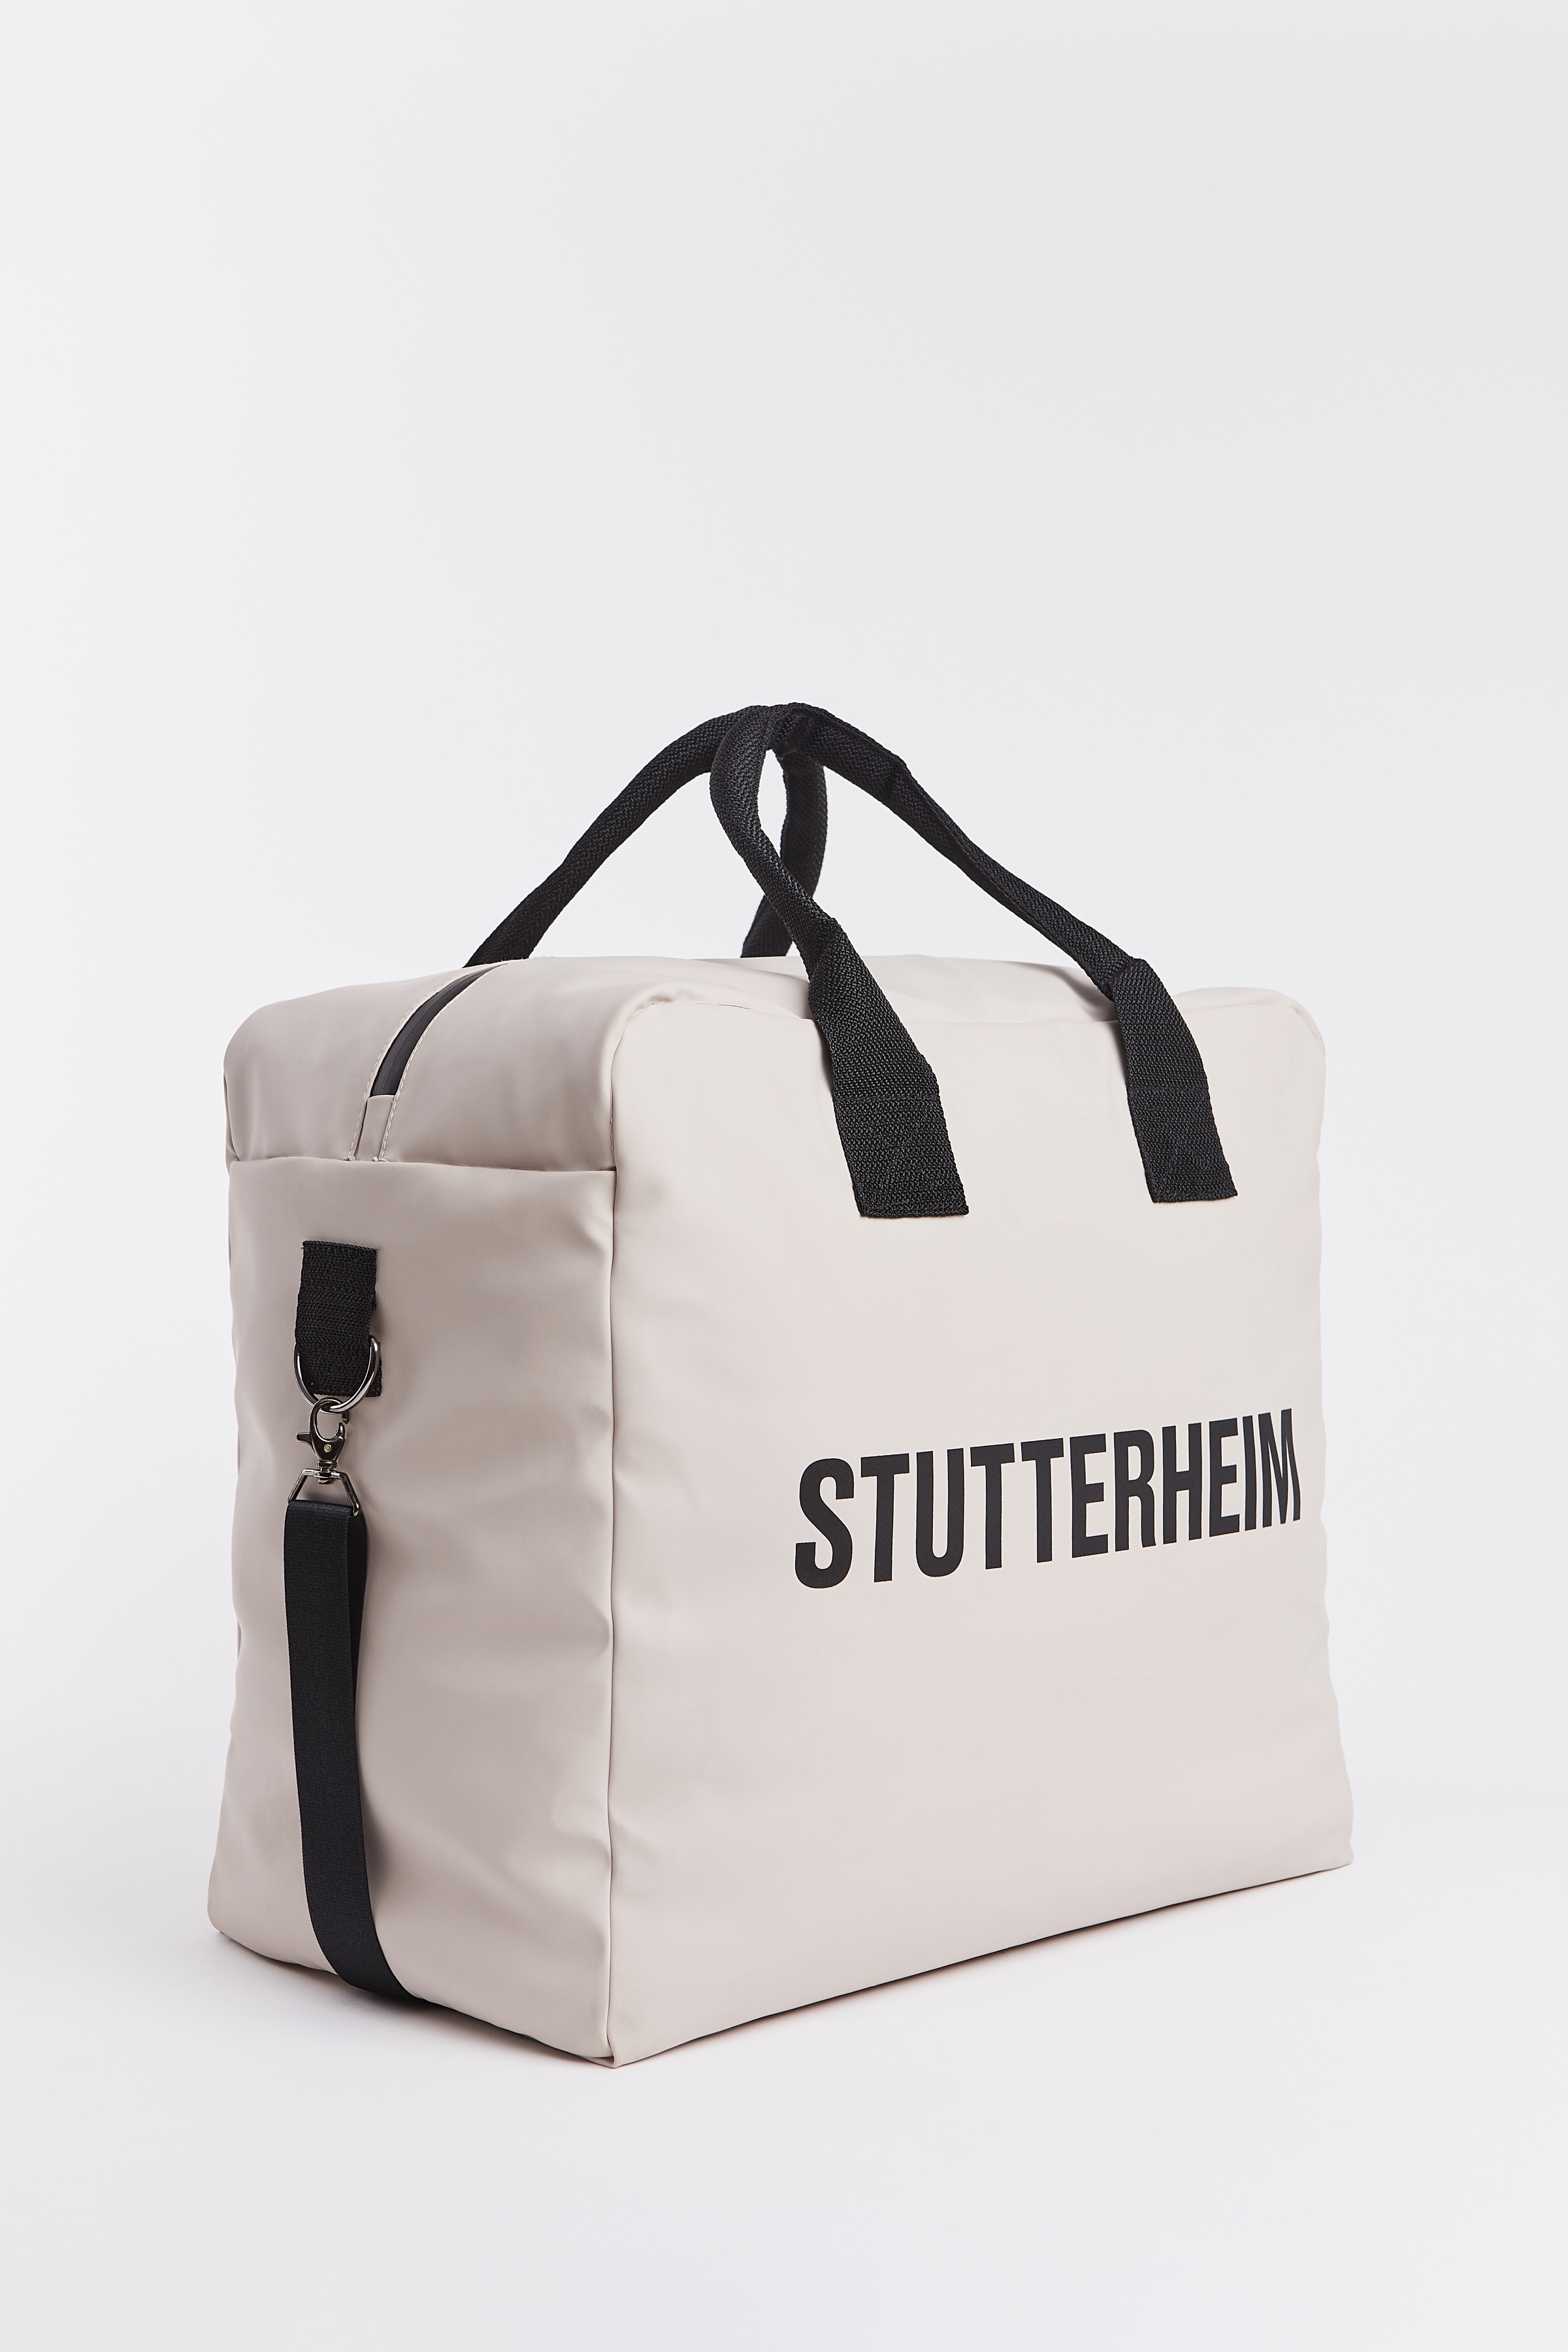 STUTTERHEIM - Wash Bag - Container Large Light Sand - Unisex - Onesize